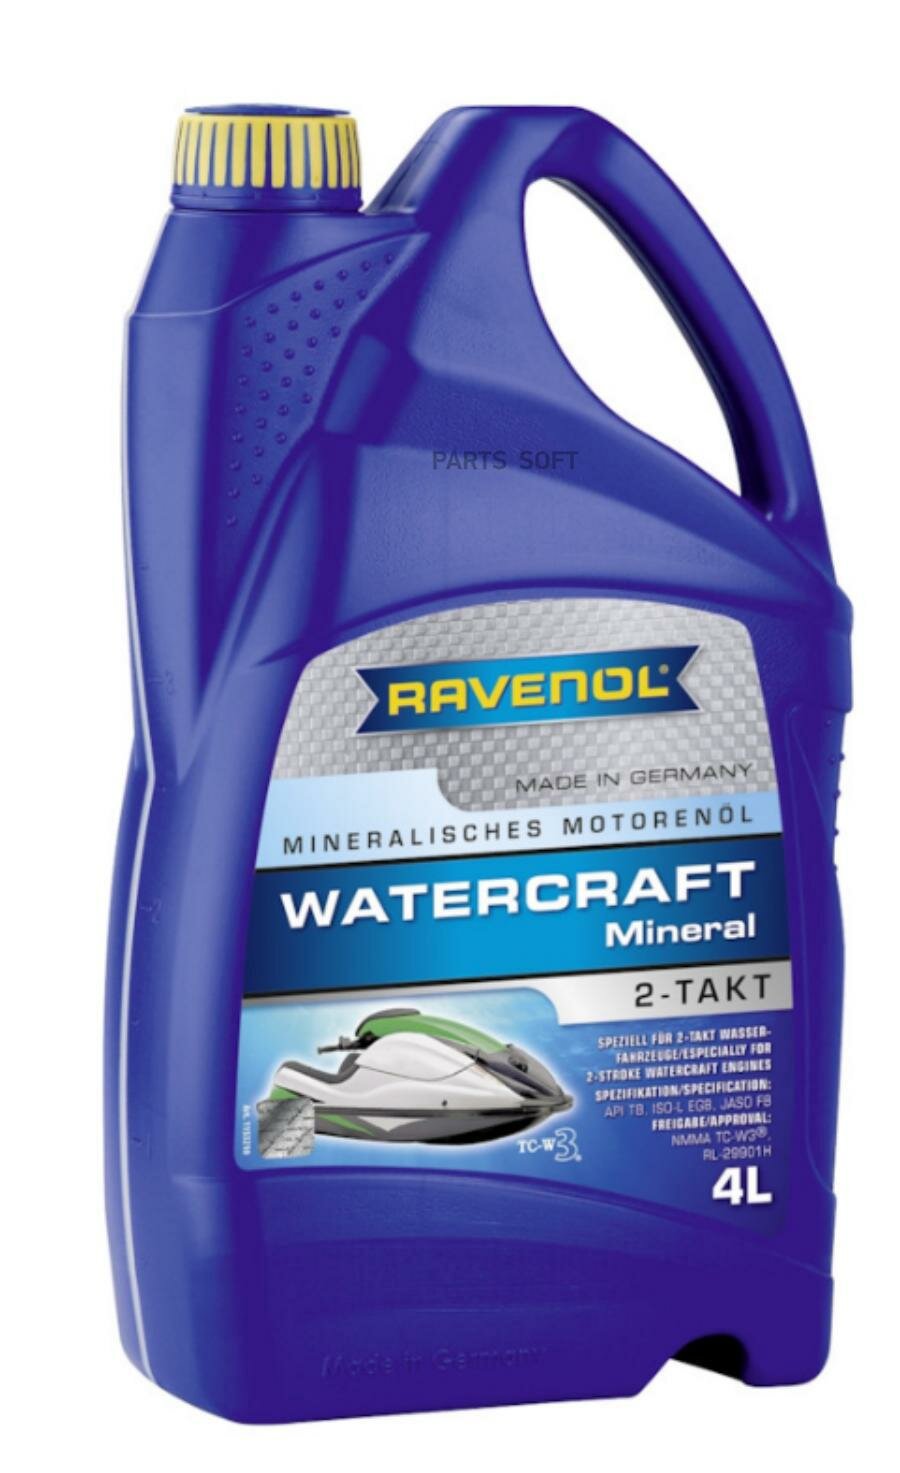 Моторное масло для 2-Такт RAVENOL Watercraft Mineral 2-Takt (4л) new RAVENOL / арт. 115321000401999 - (1 шт)